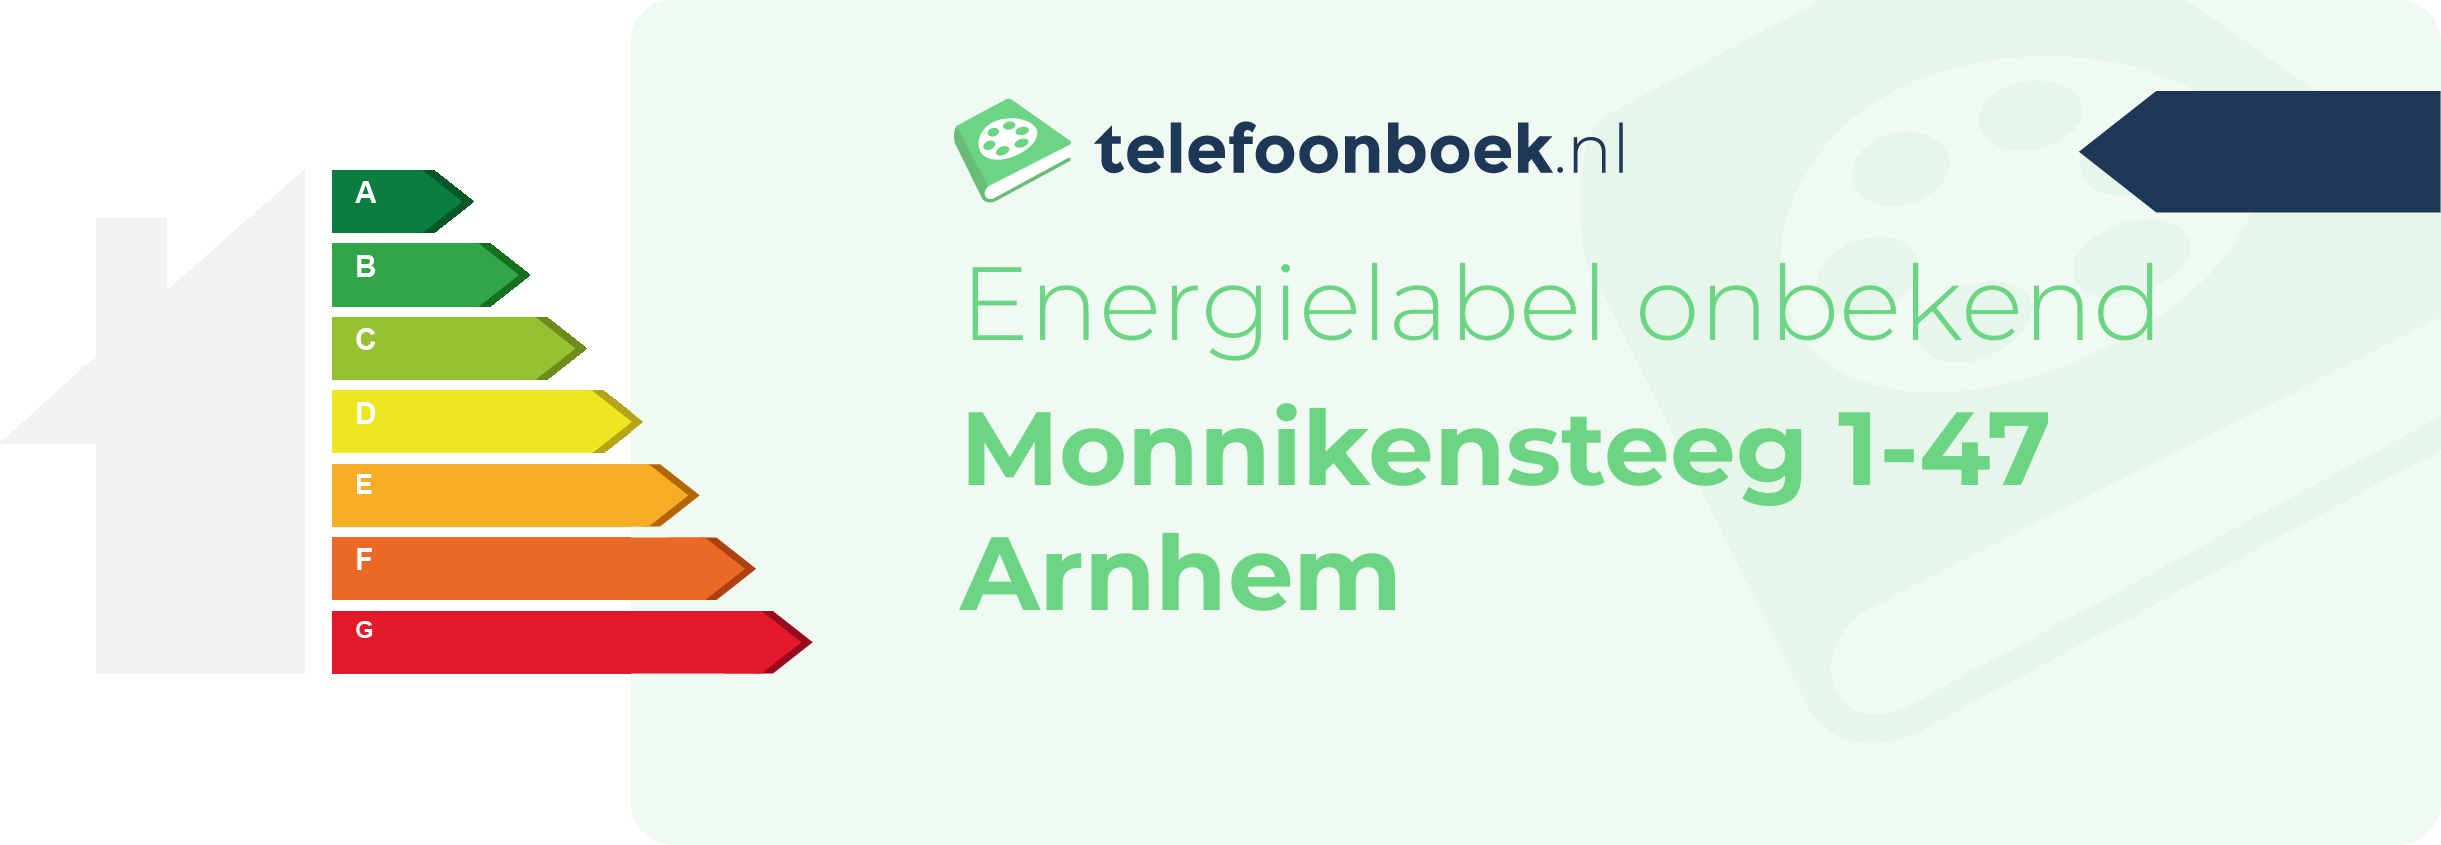 Energielabel Monnikensteeg 1-47 Arnhem